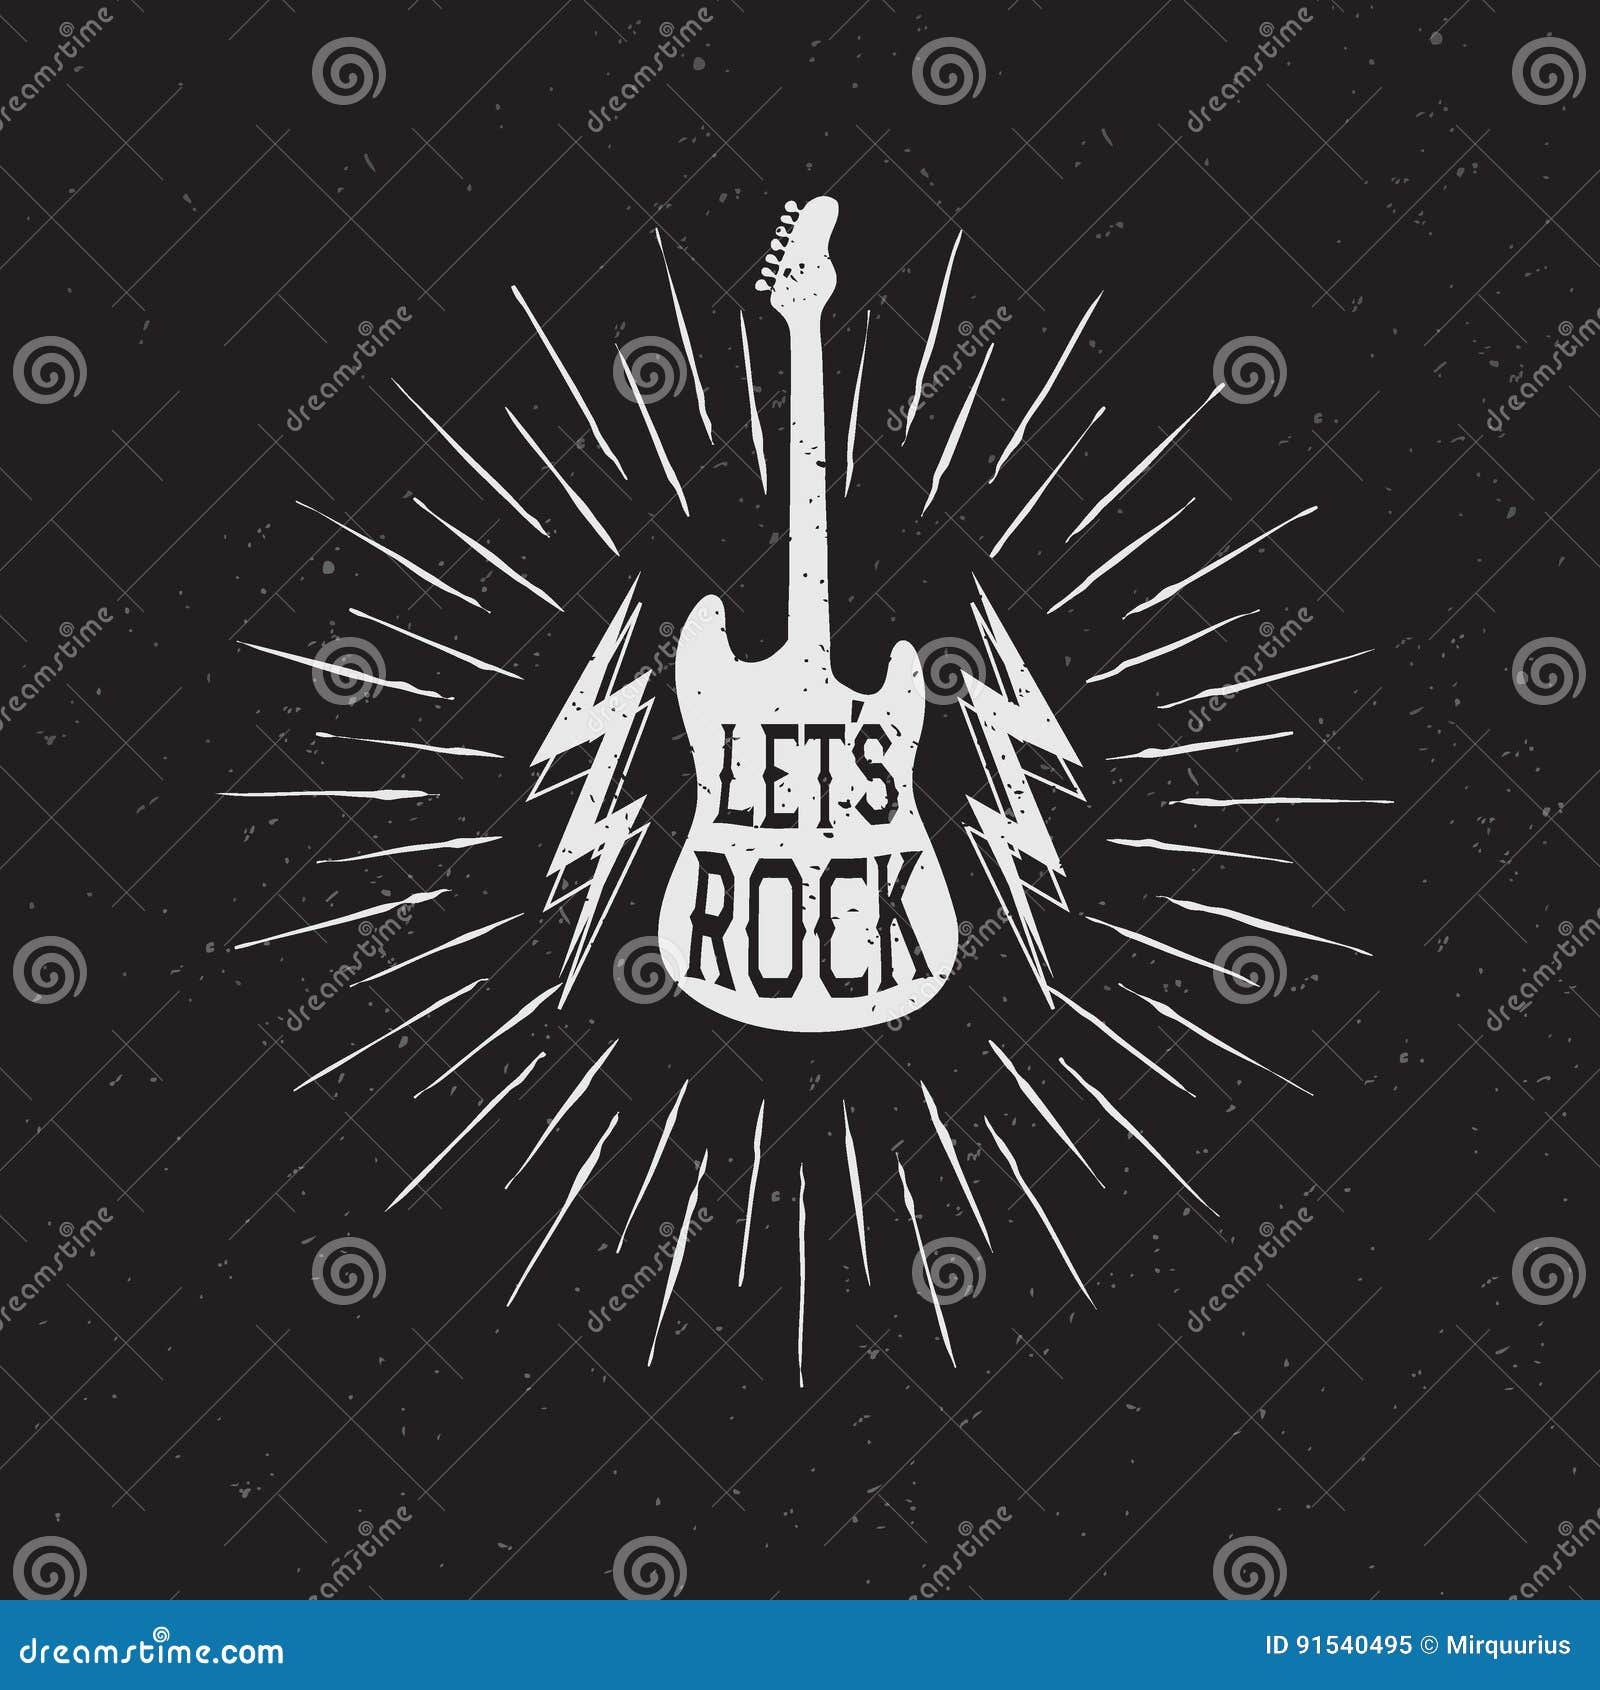 Lets rock prints emblem stock vector. Illustration of monochrome - 91540495